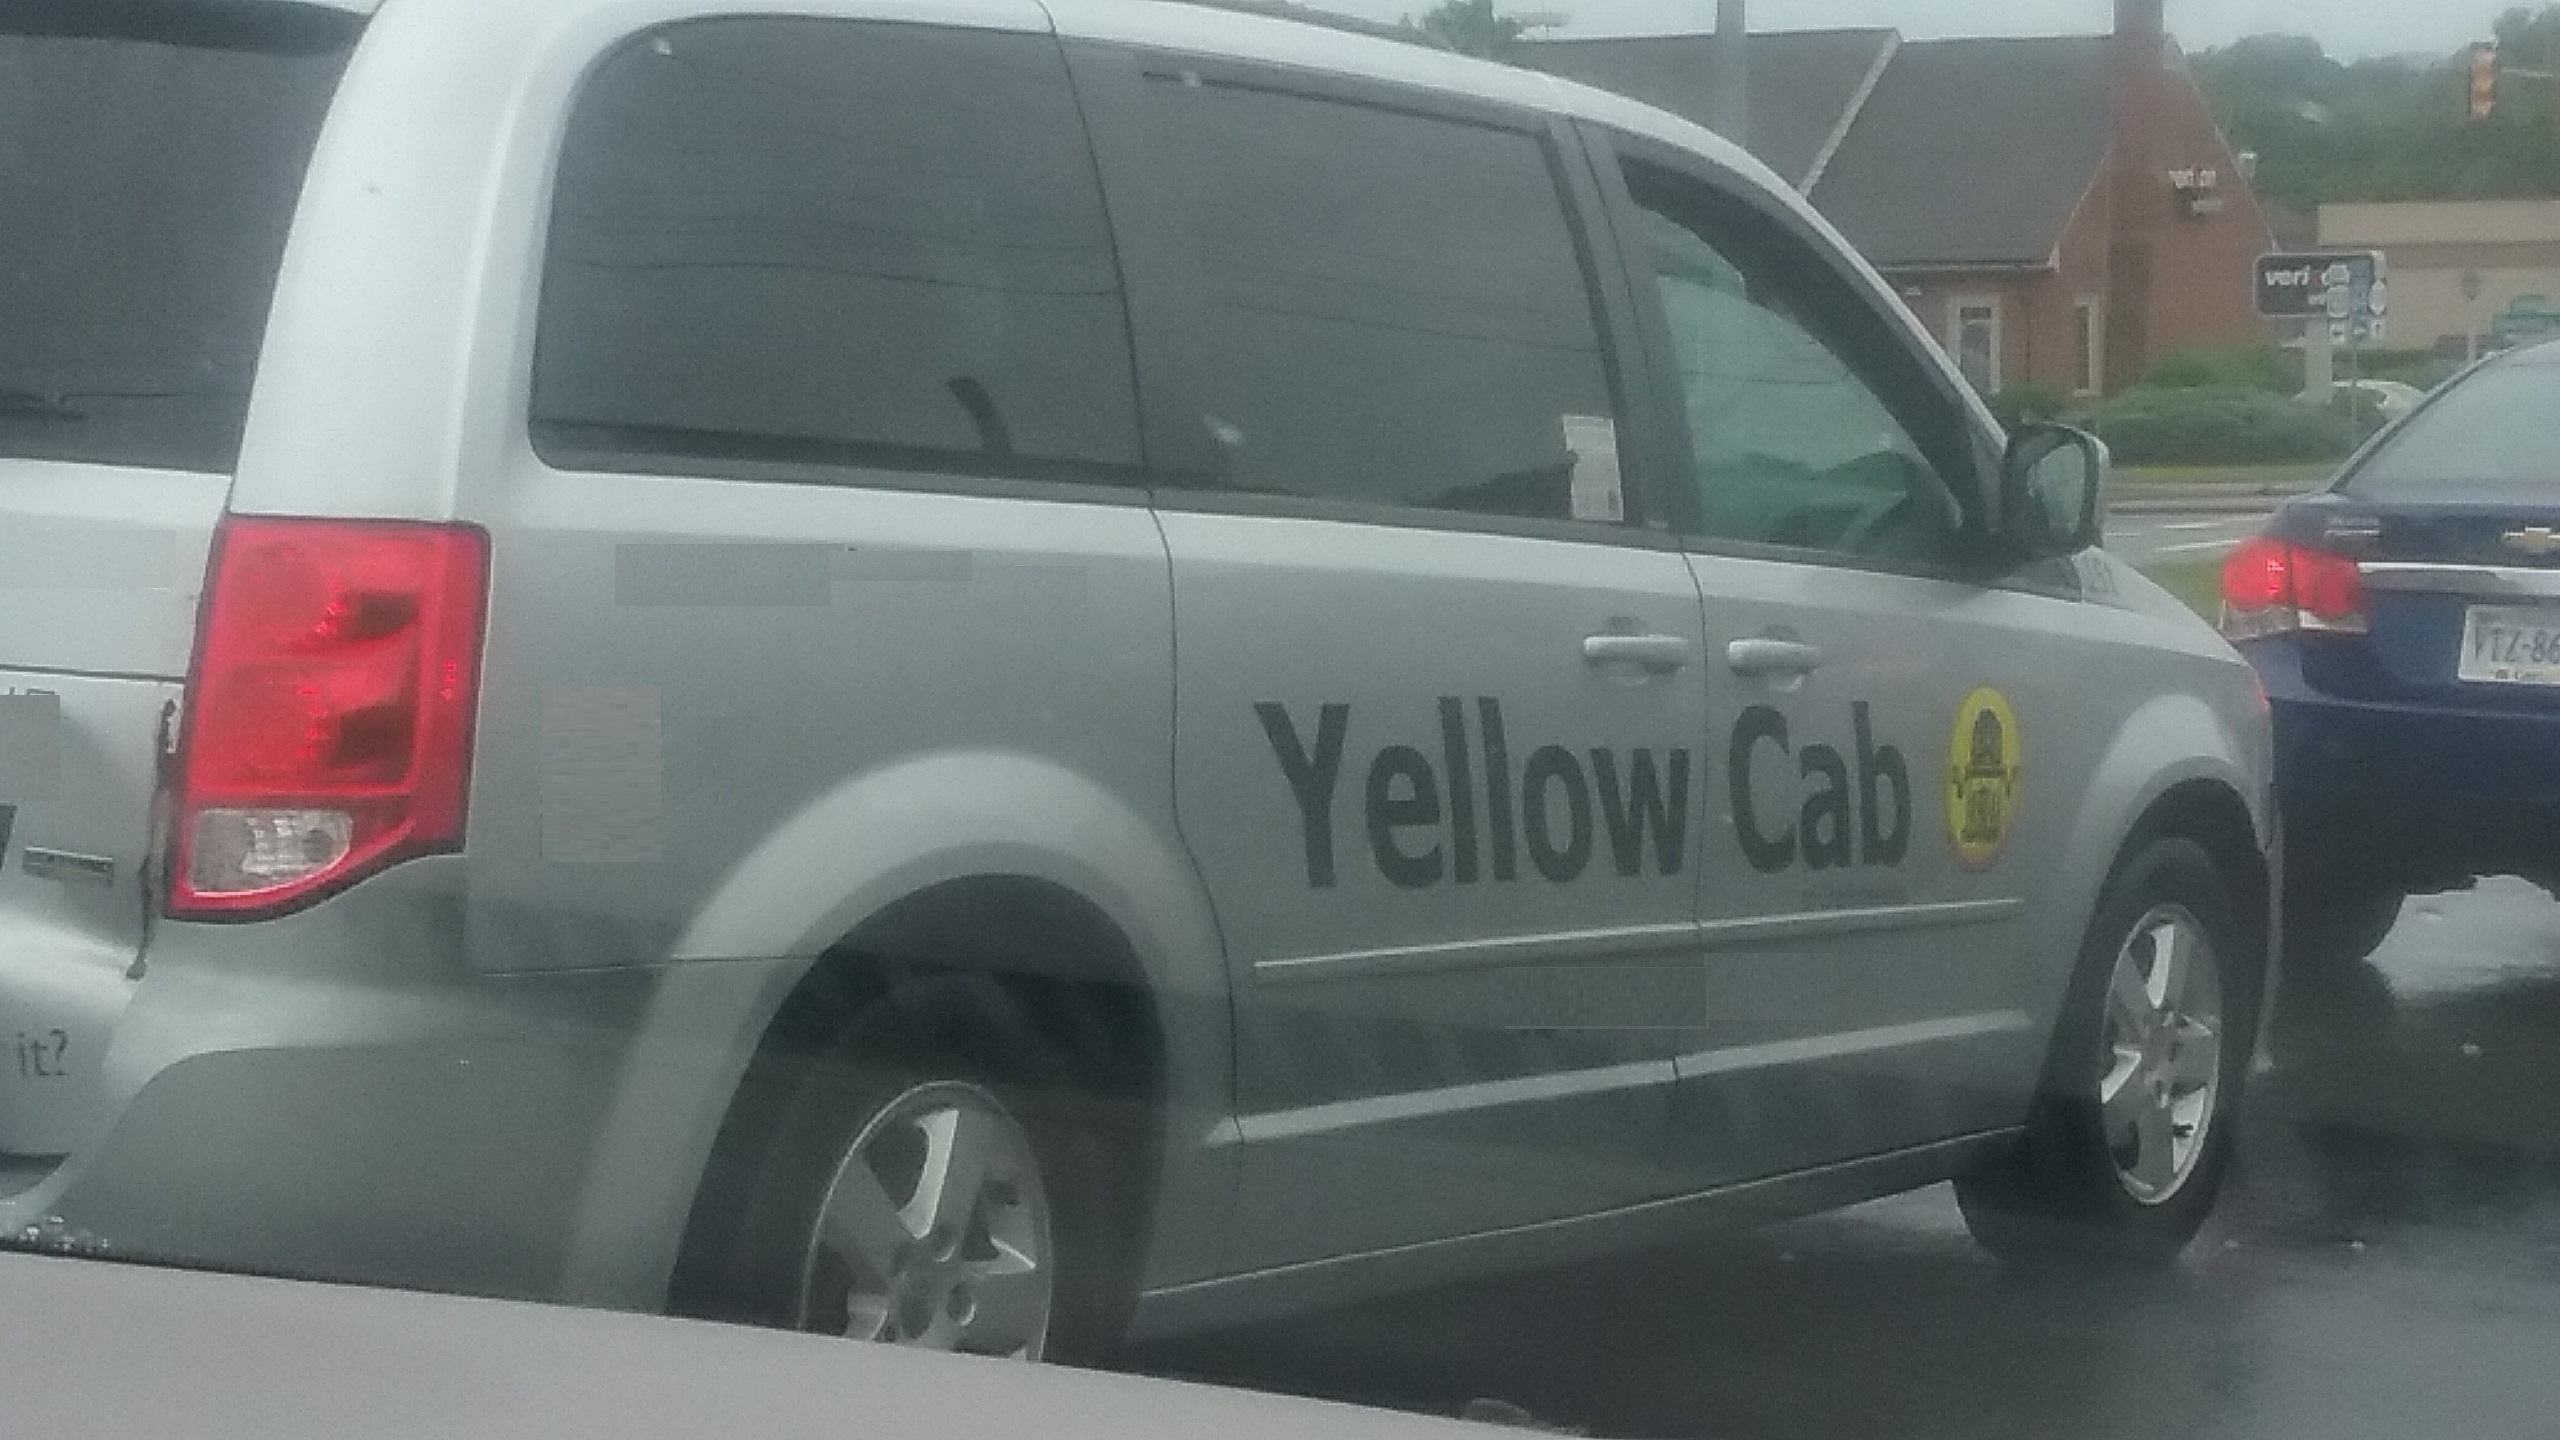 Yellow cab in Virginia